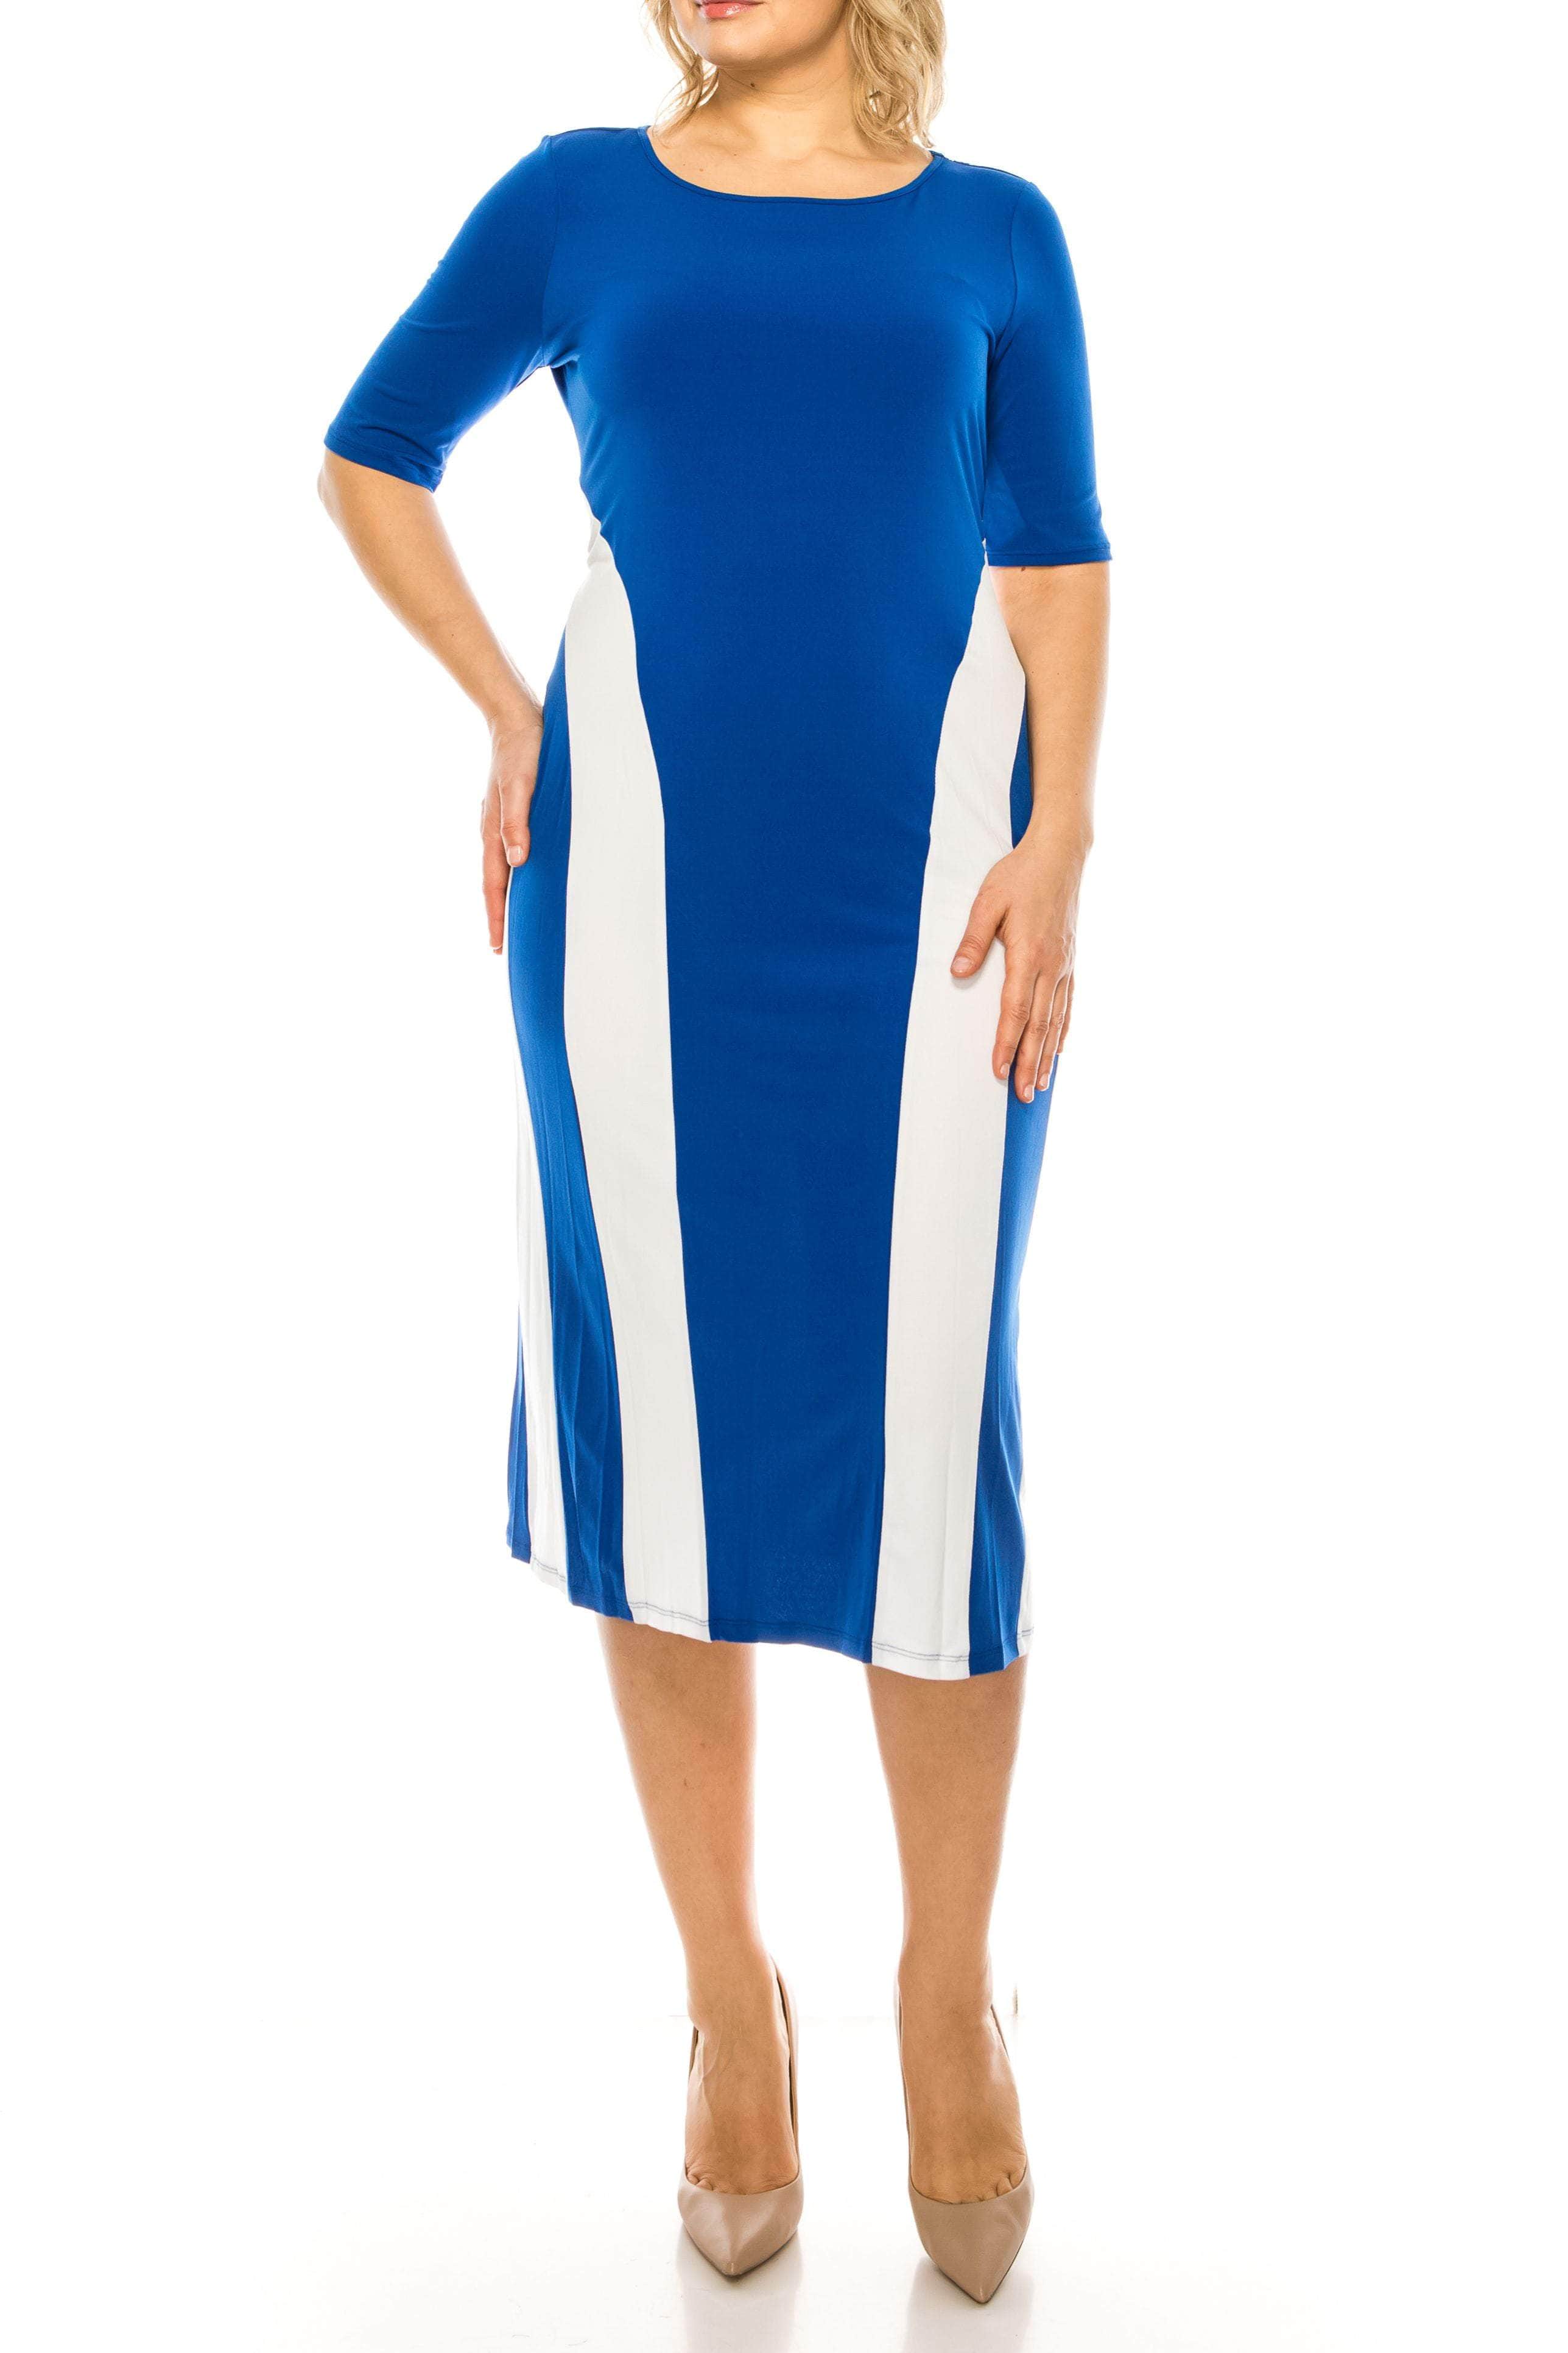 Image of ILE Clothing ITS300 - White Stripes On Sides Midi Formal Dress